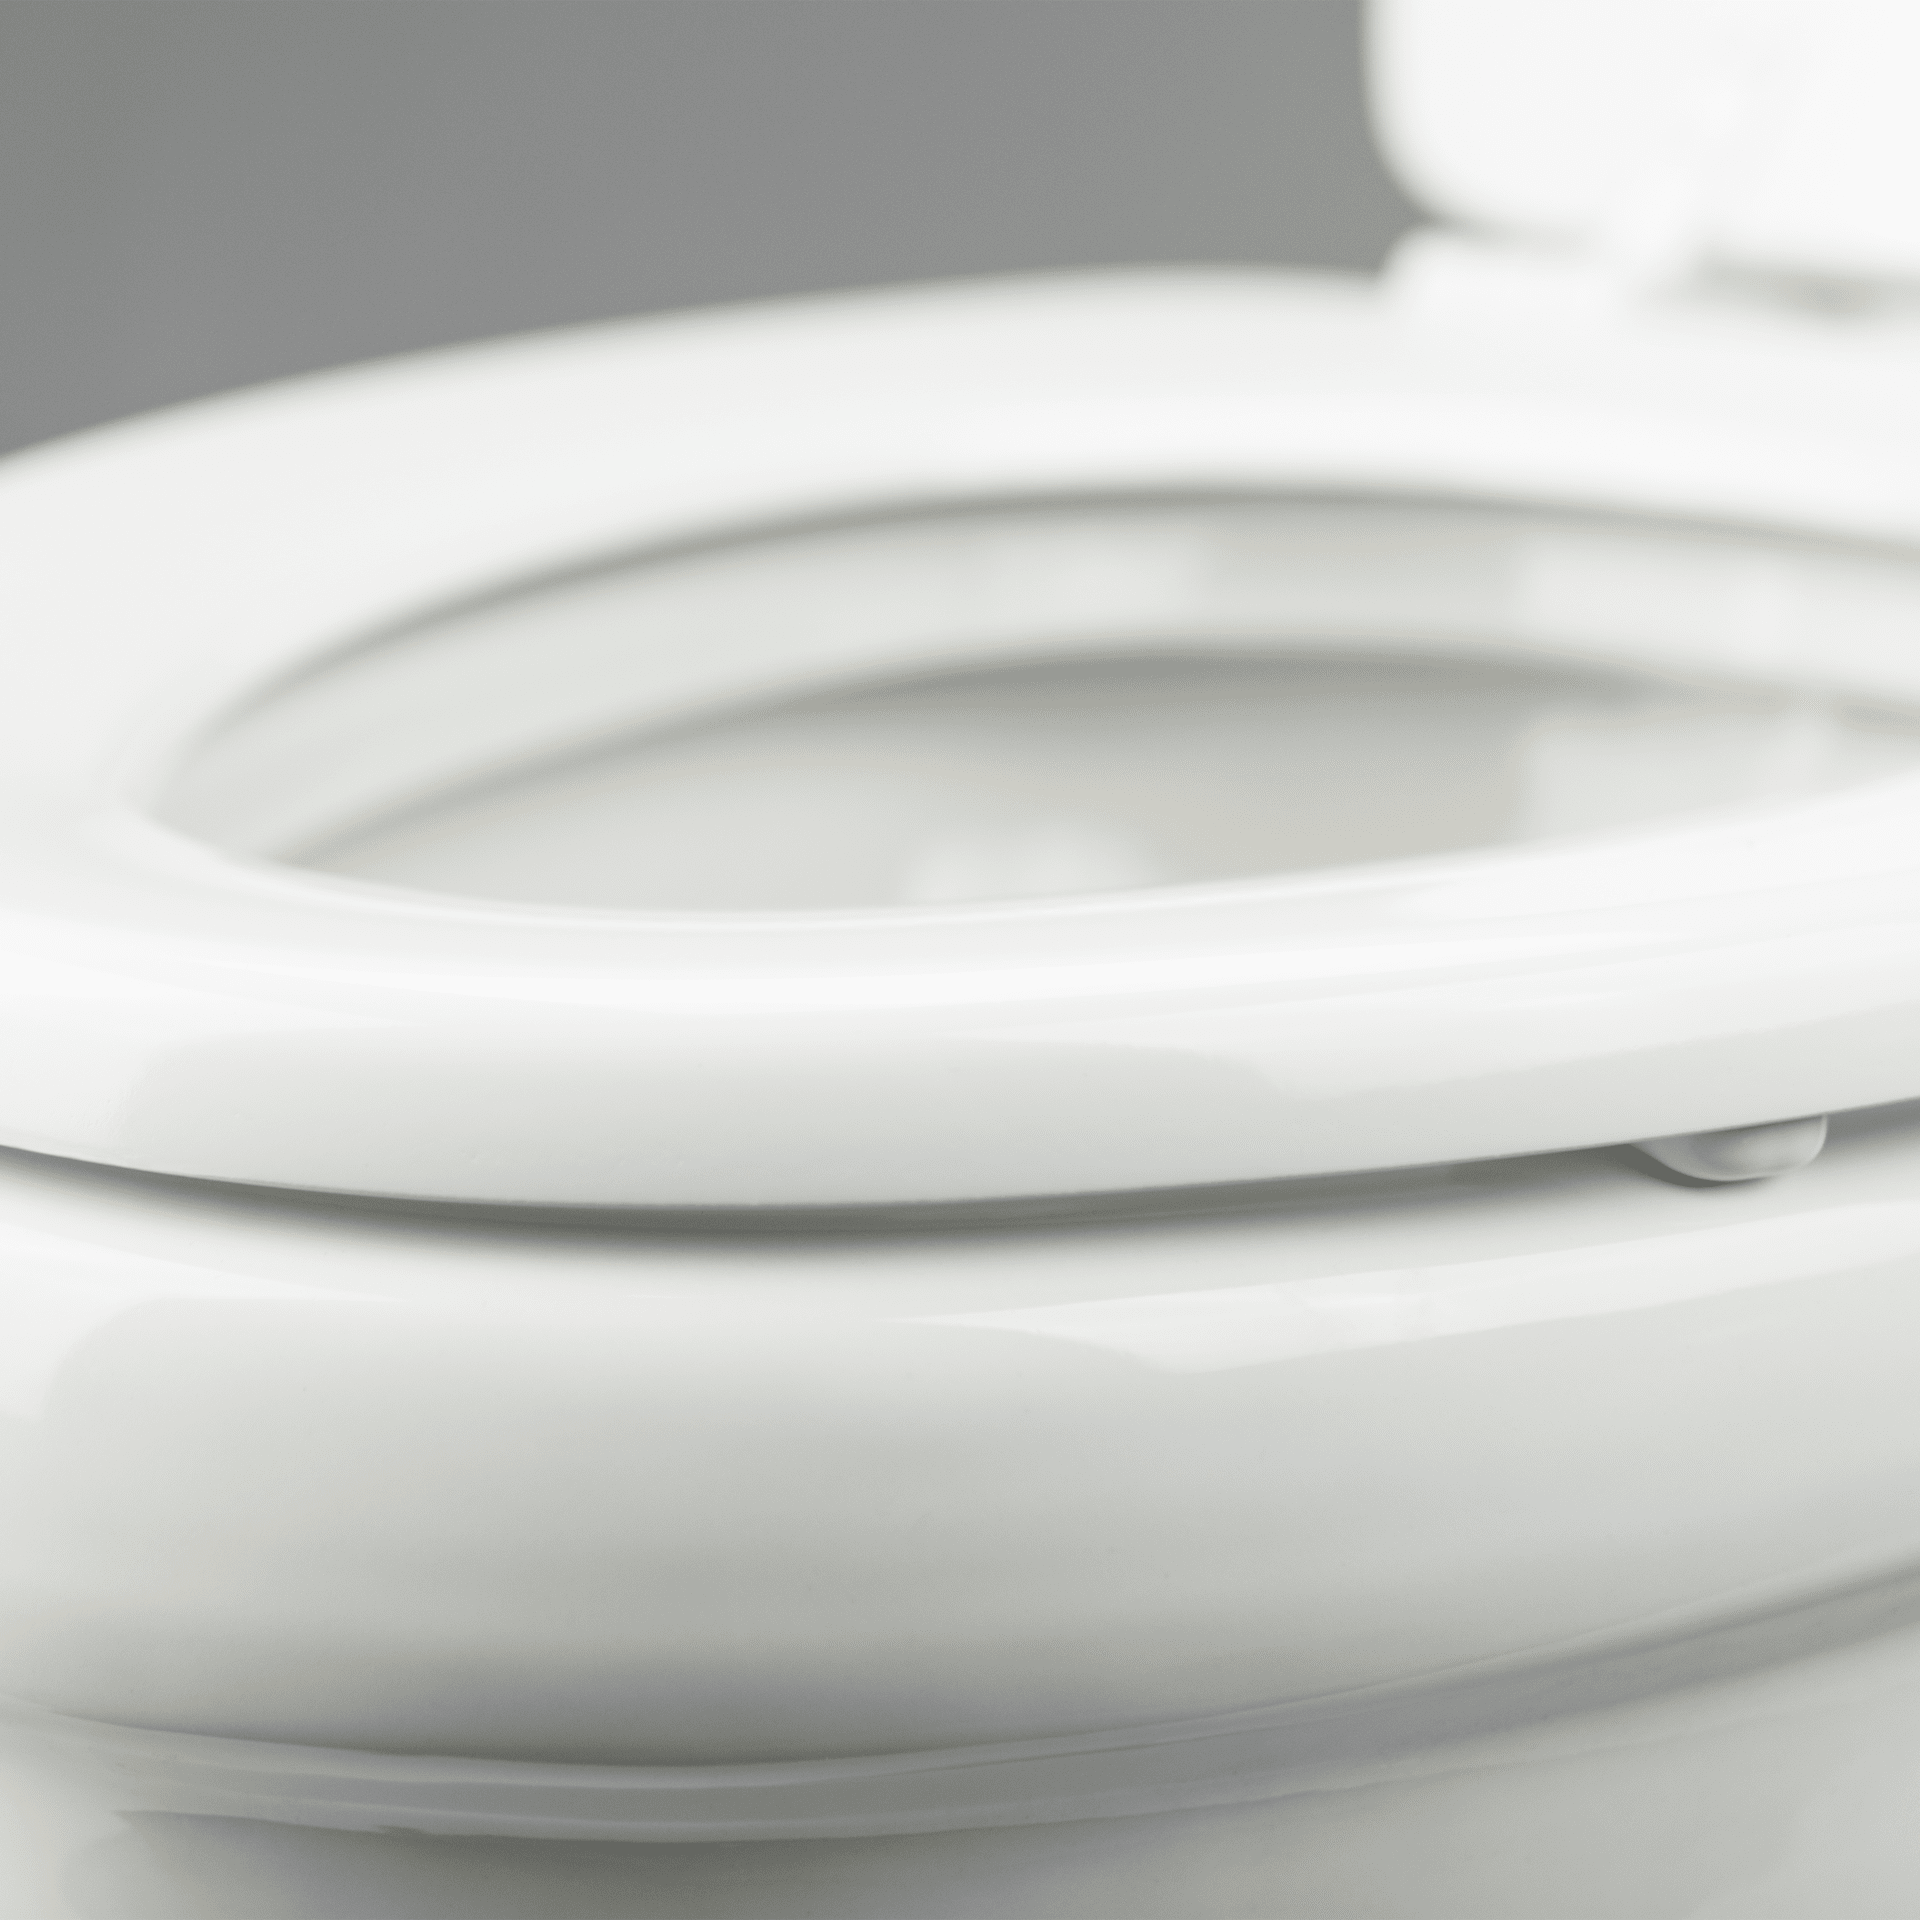 Dometic MasterFlush 8541 - Macerator toilet, full-ceramic, flat